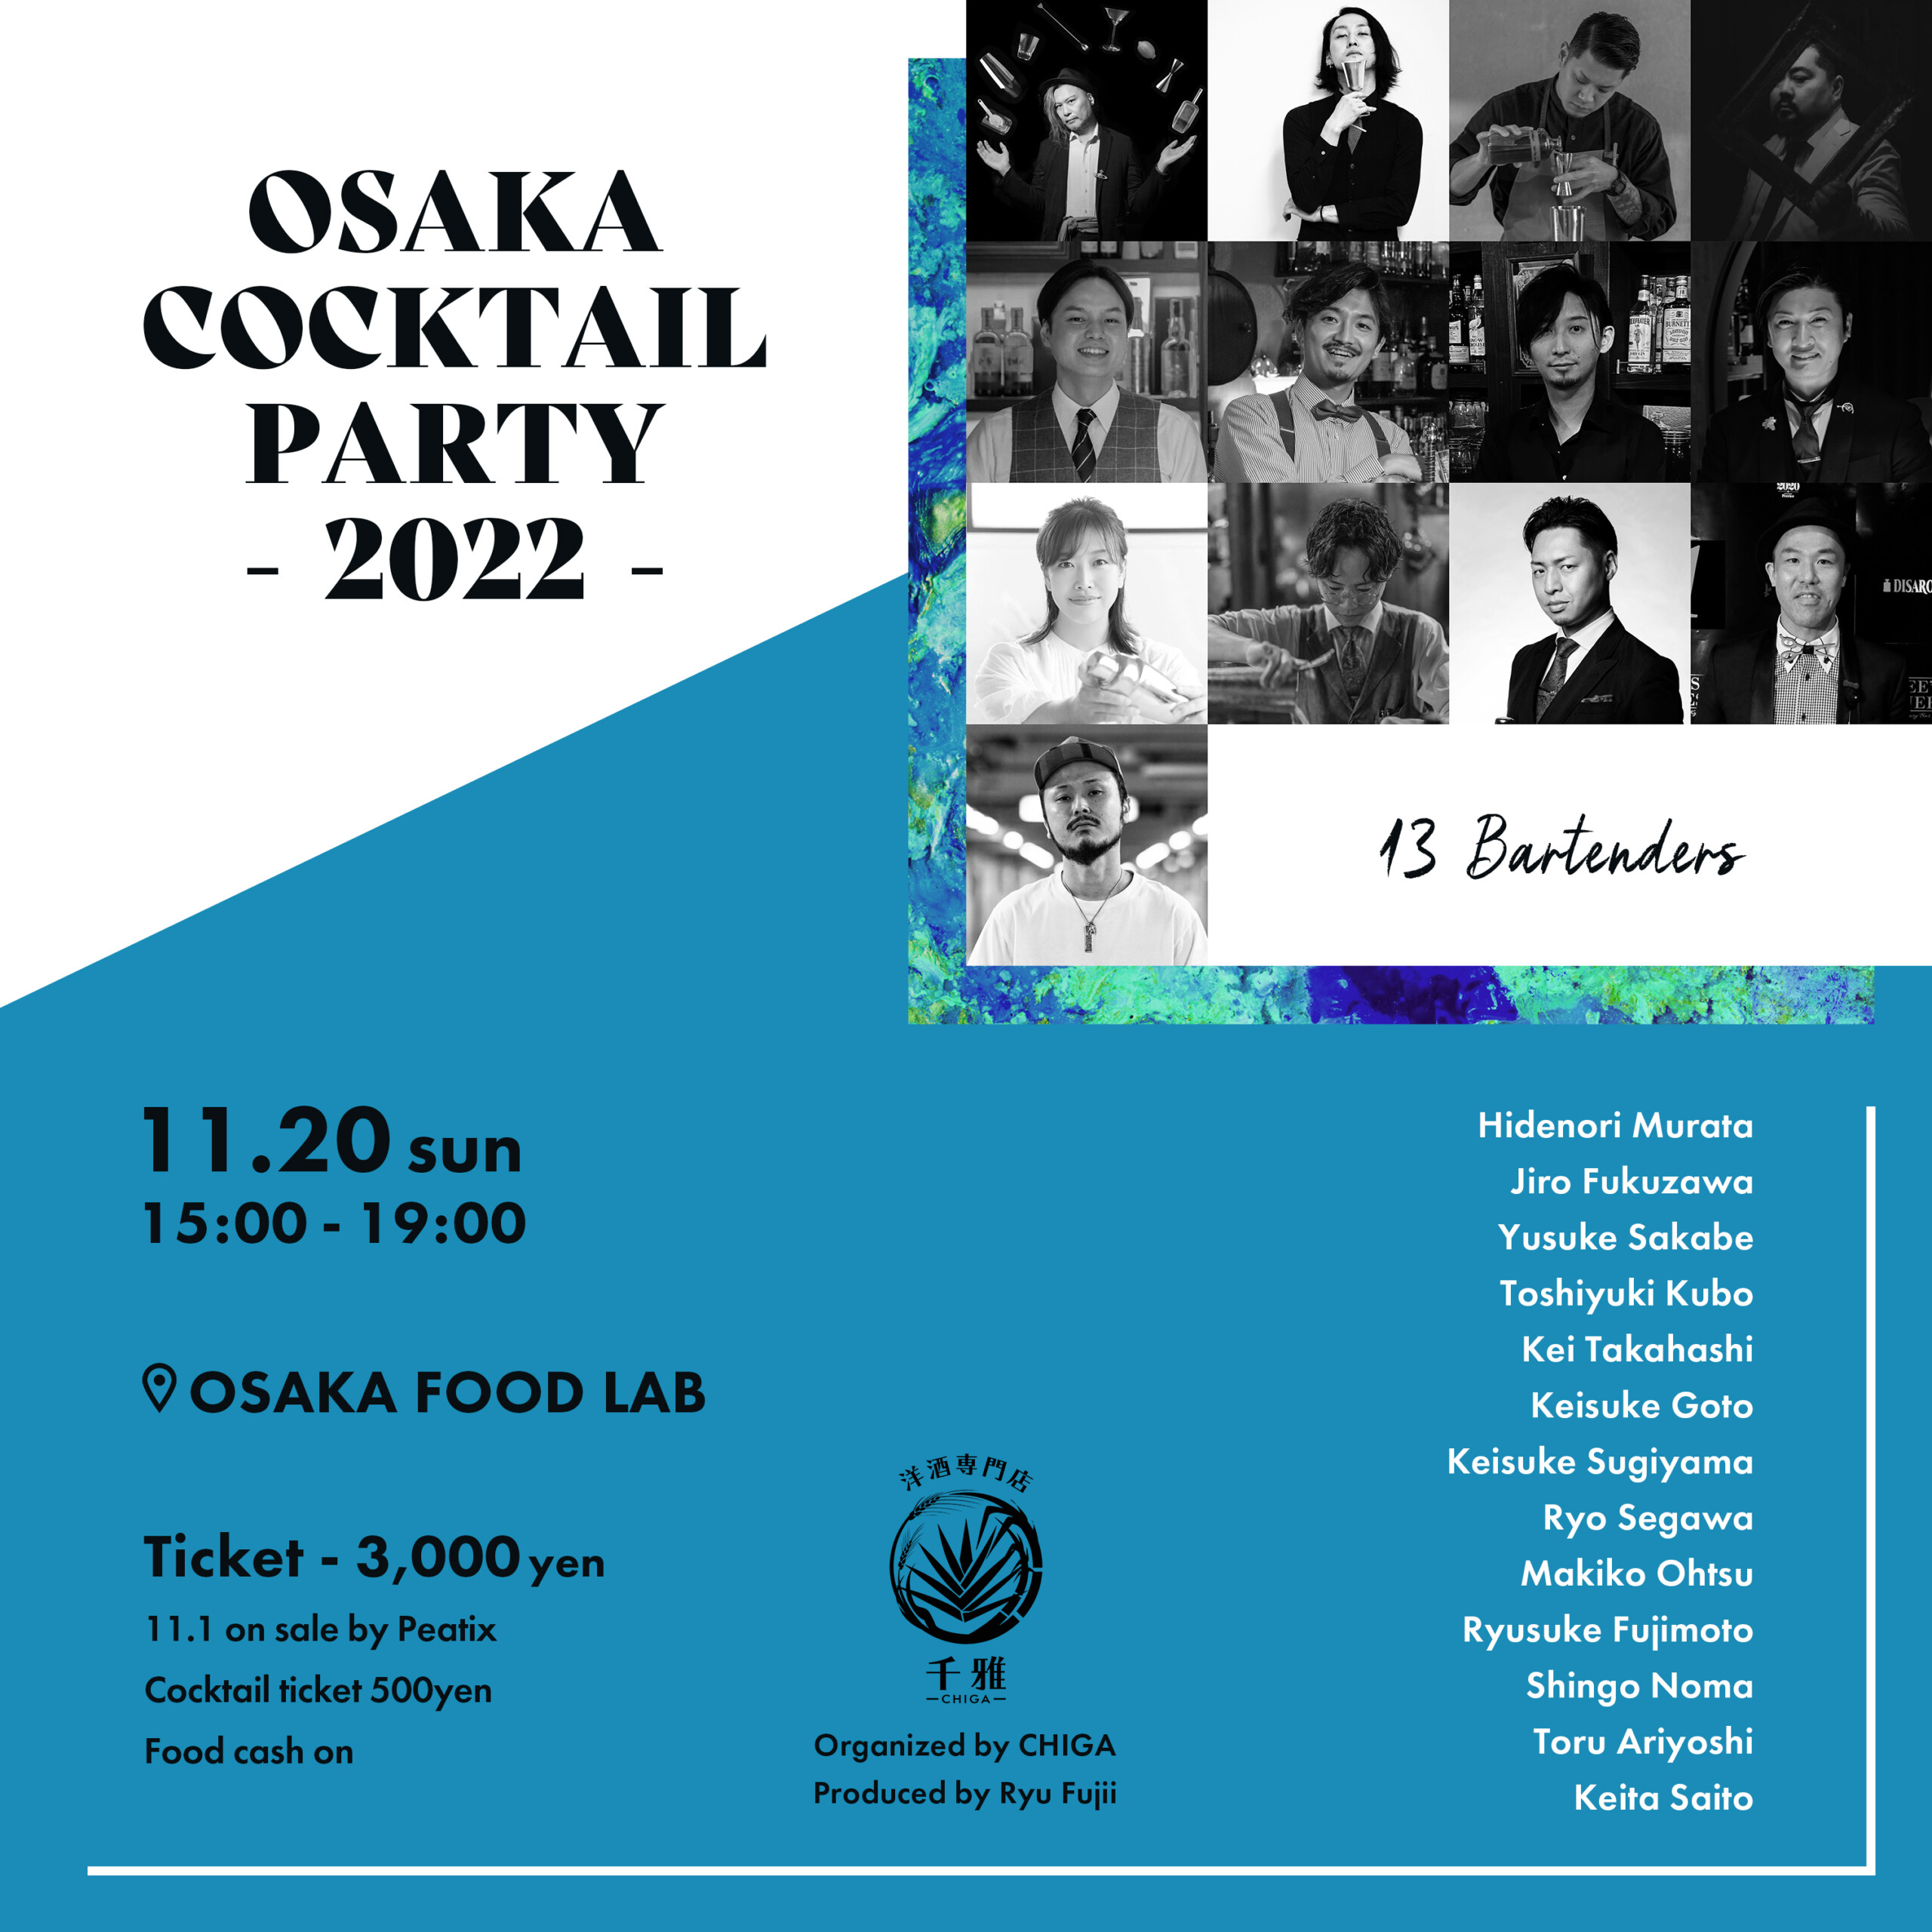 OSAKA COCKTAIL PARTY 2022